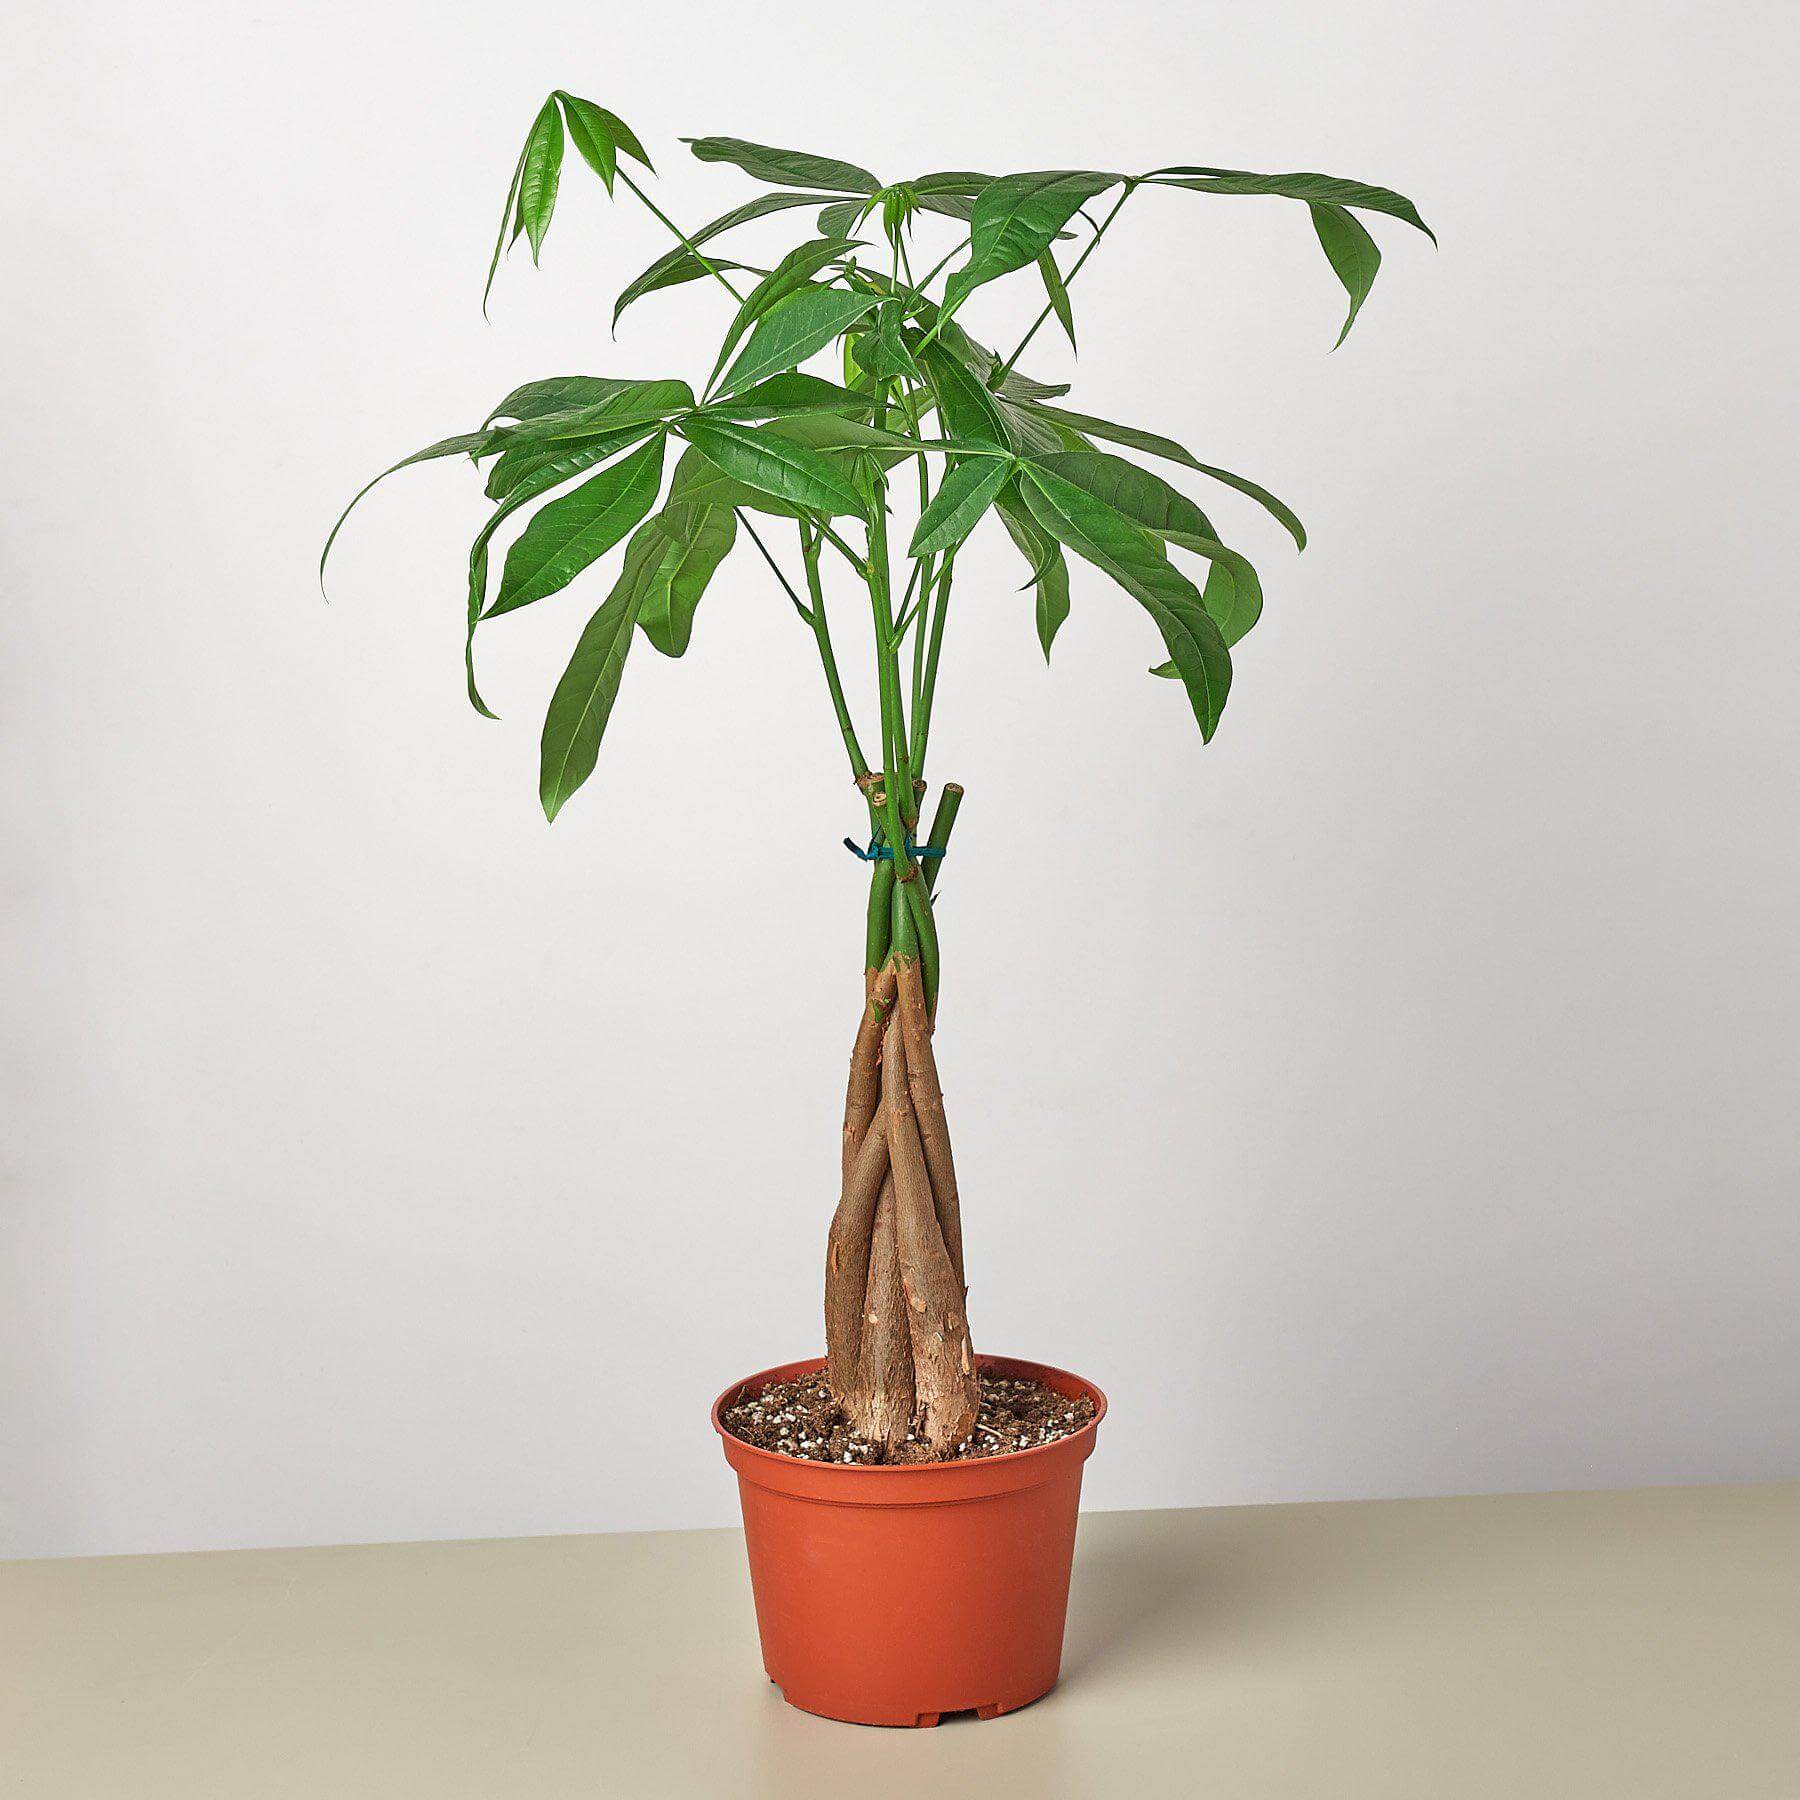 Money Tree - Guiana Chestnut Pachira Braid | Modern house plants that clean the air